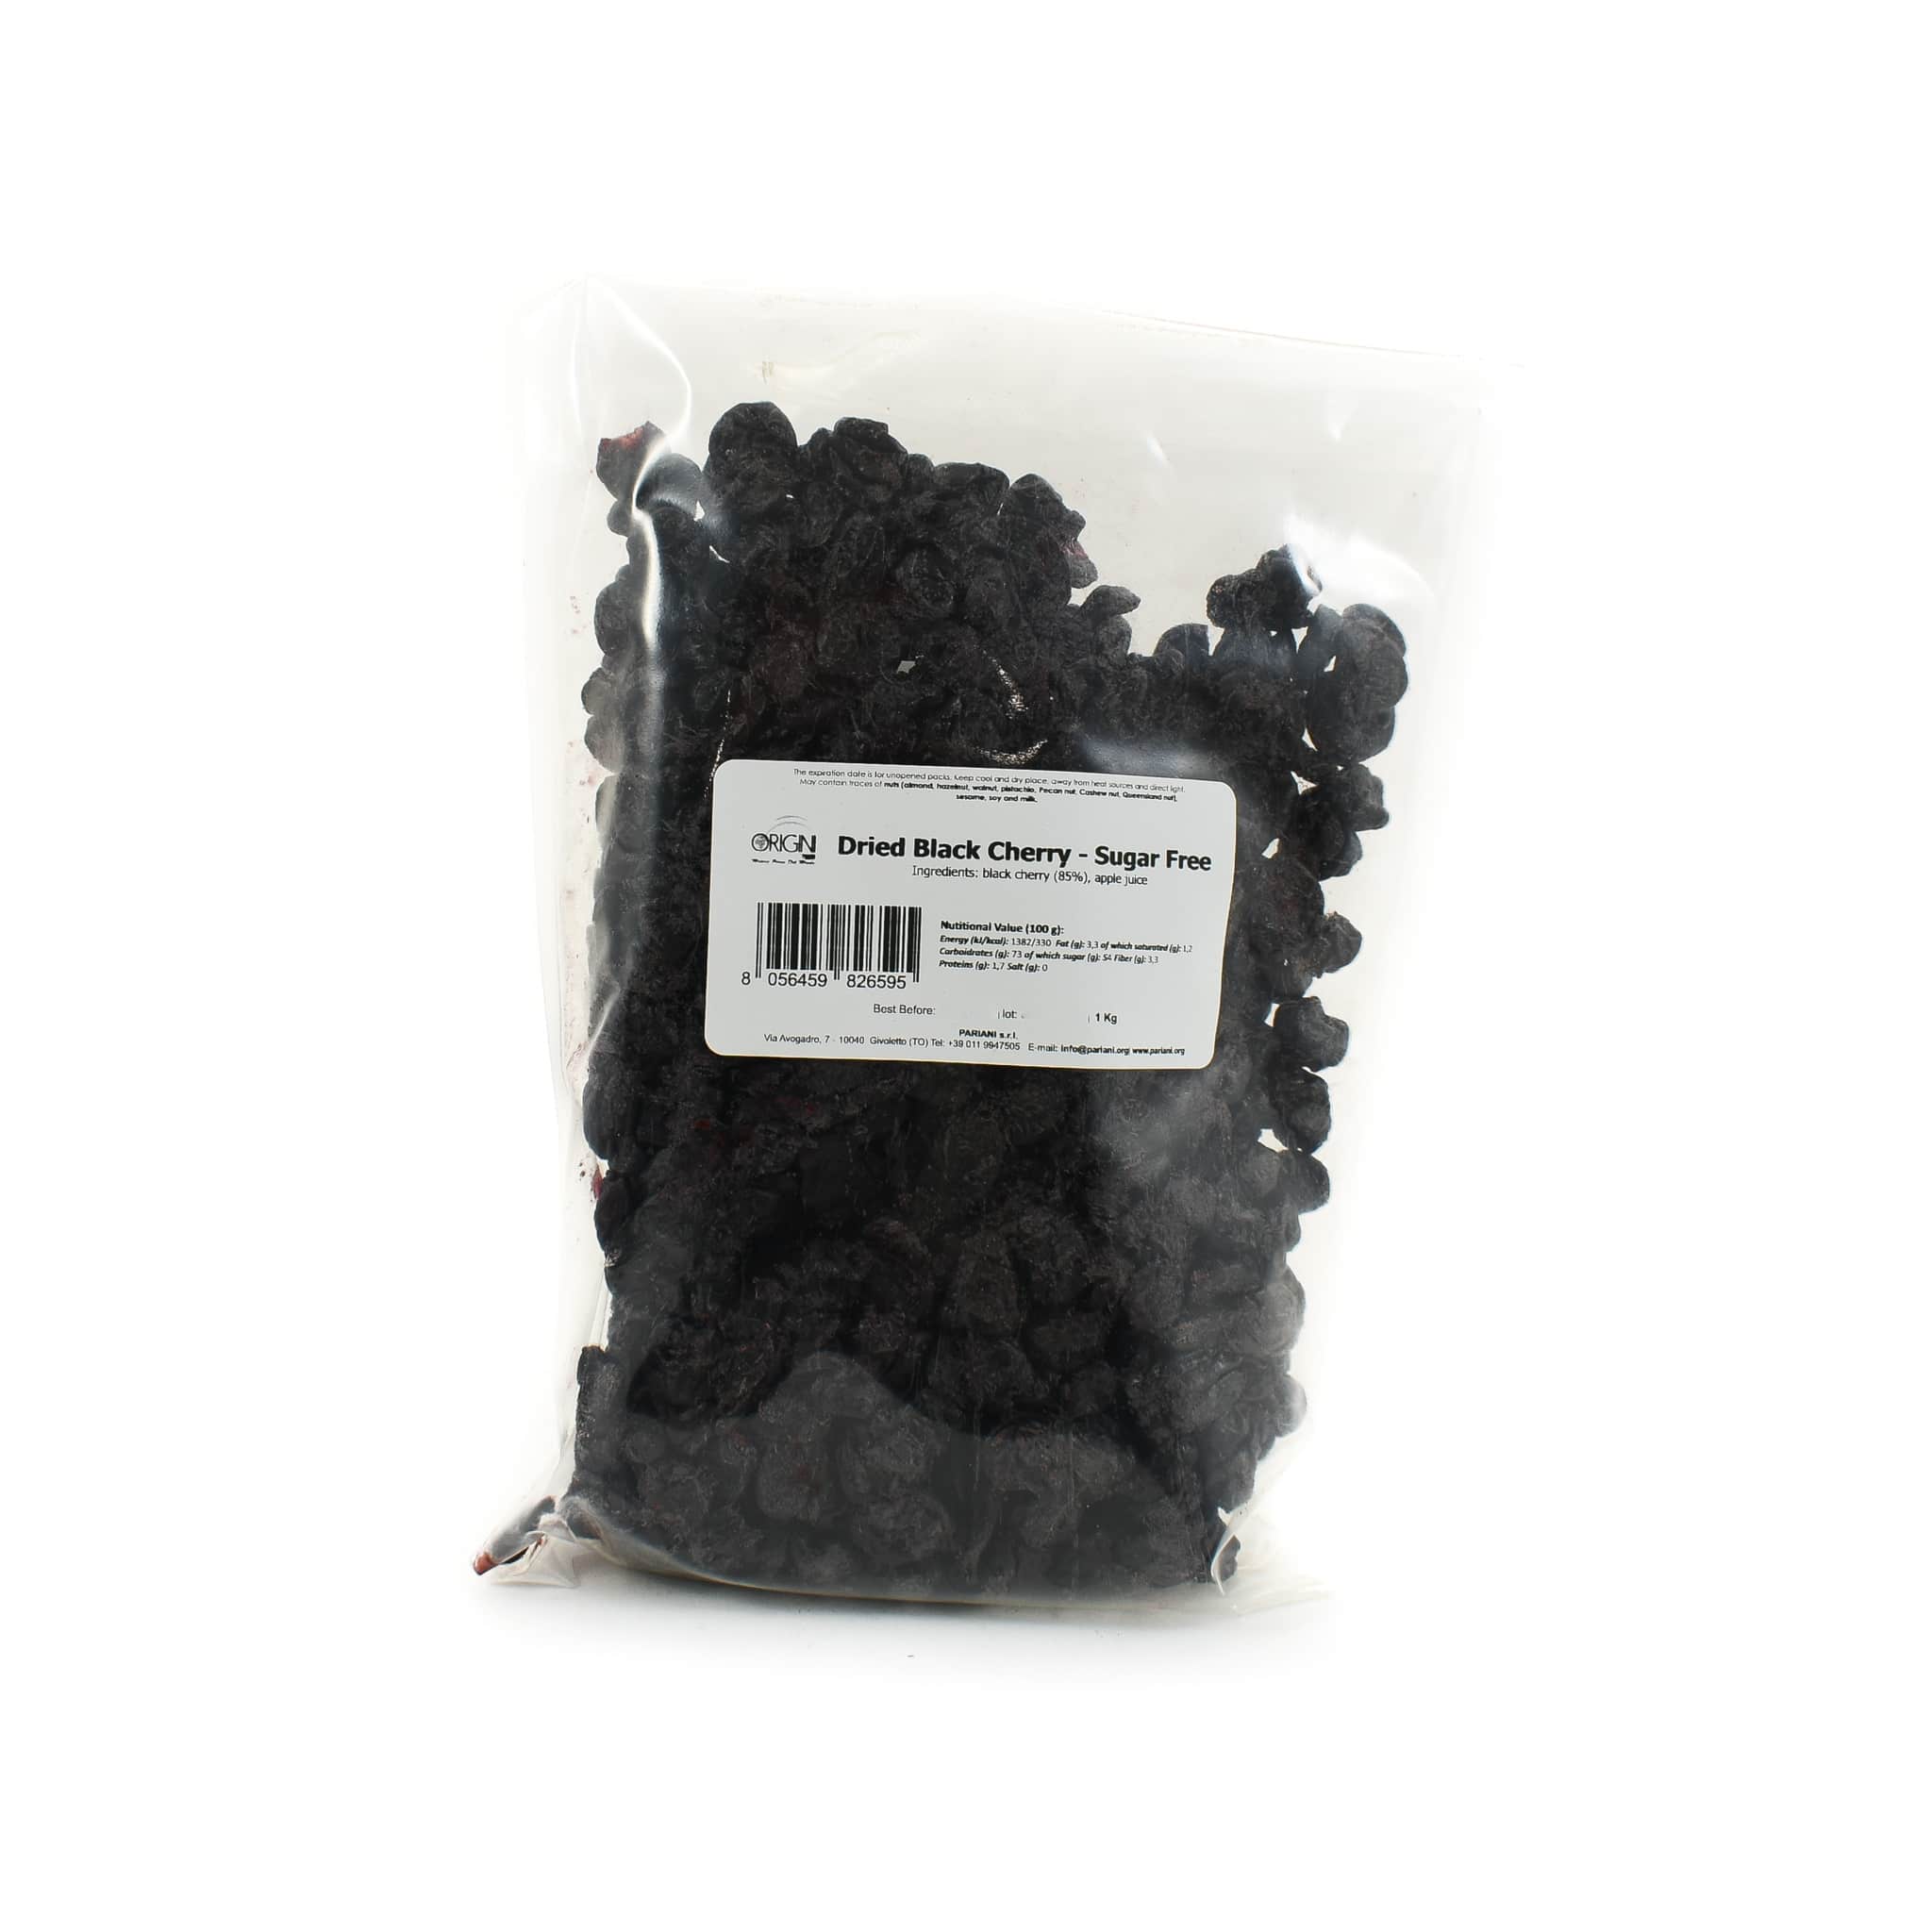 Pariani Sugar Free Amarena Dried Black Cherry 1kg packaging